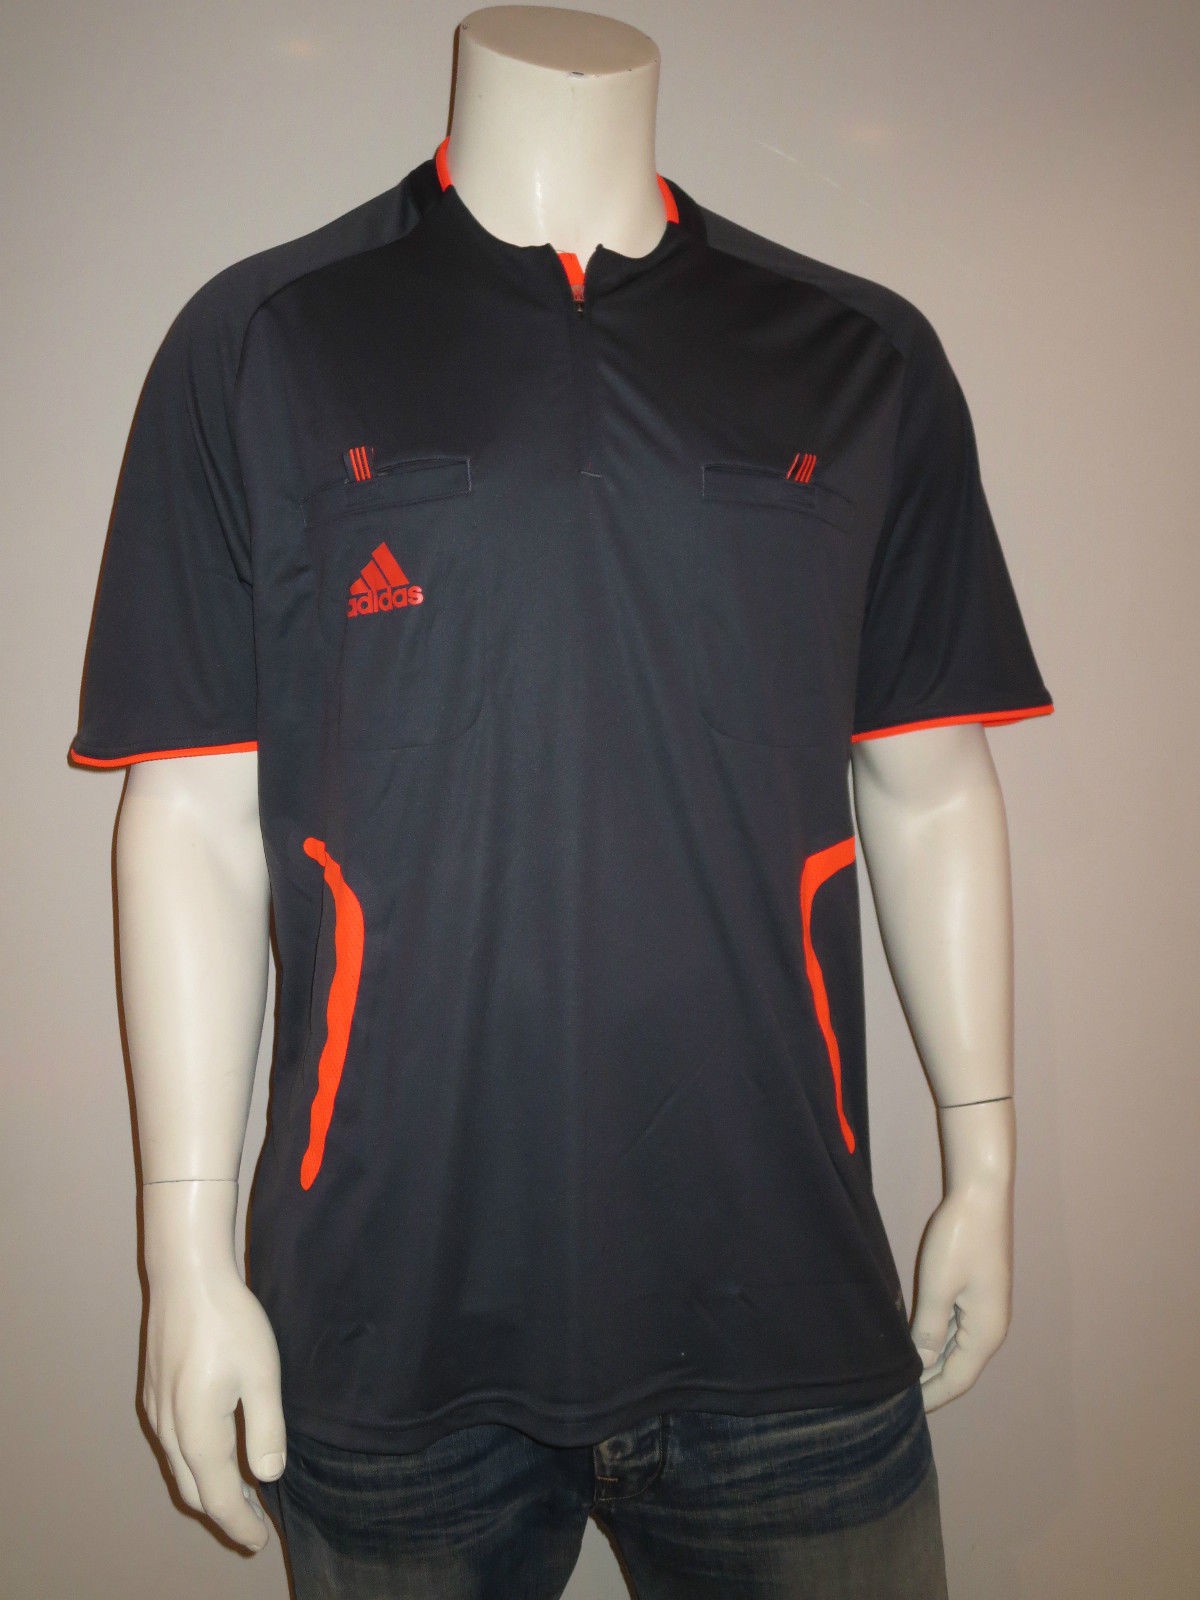 Camiseta oficial Arbitro Adidas - Tienda Yo Futbol